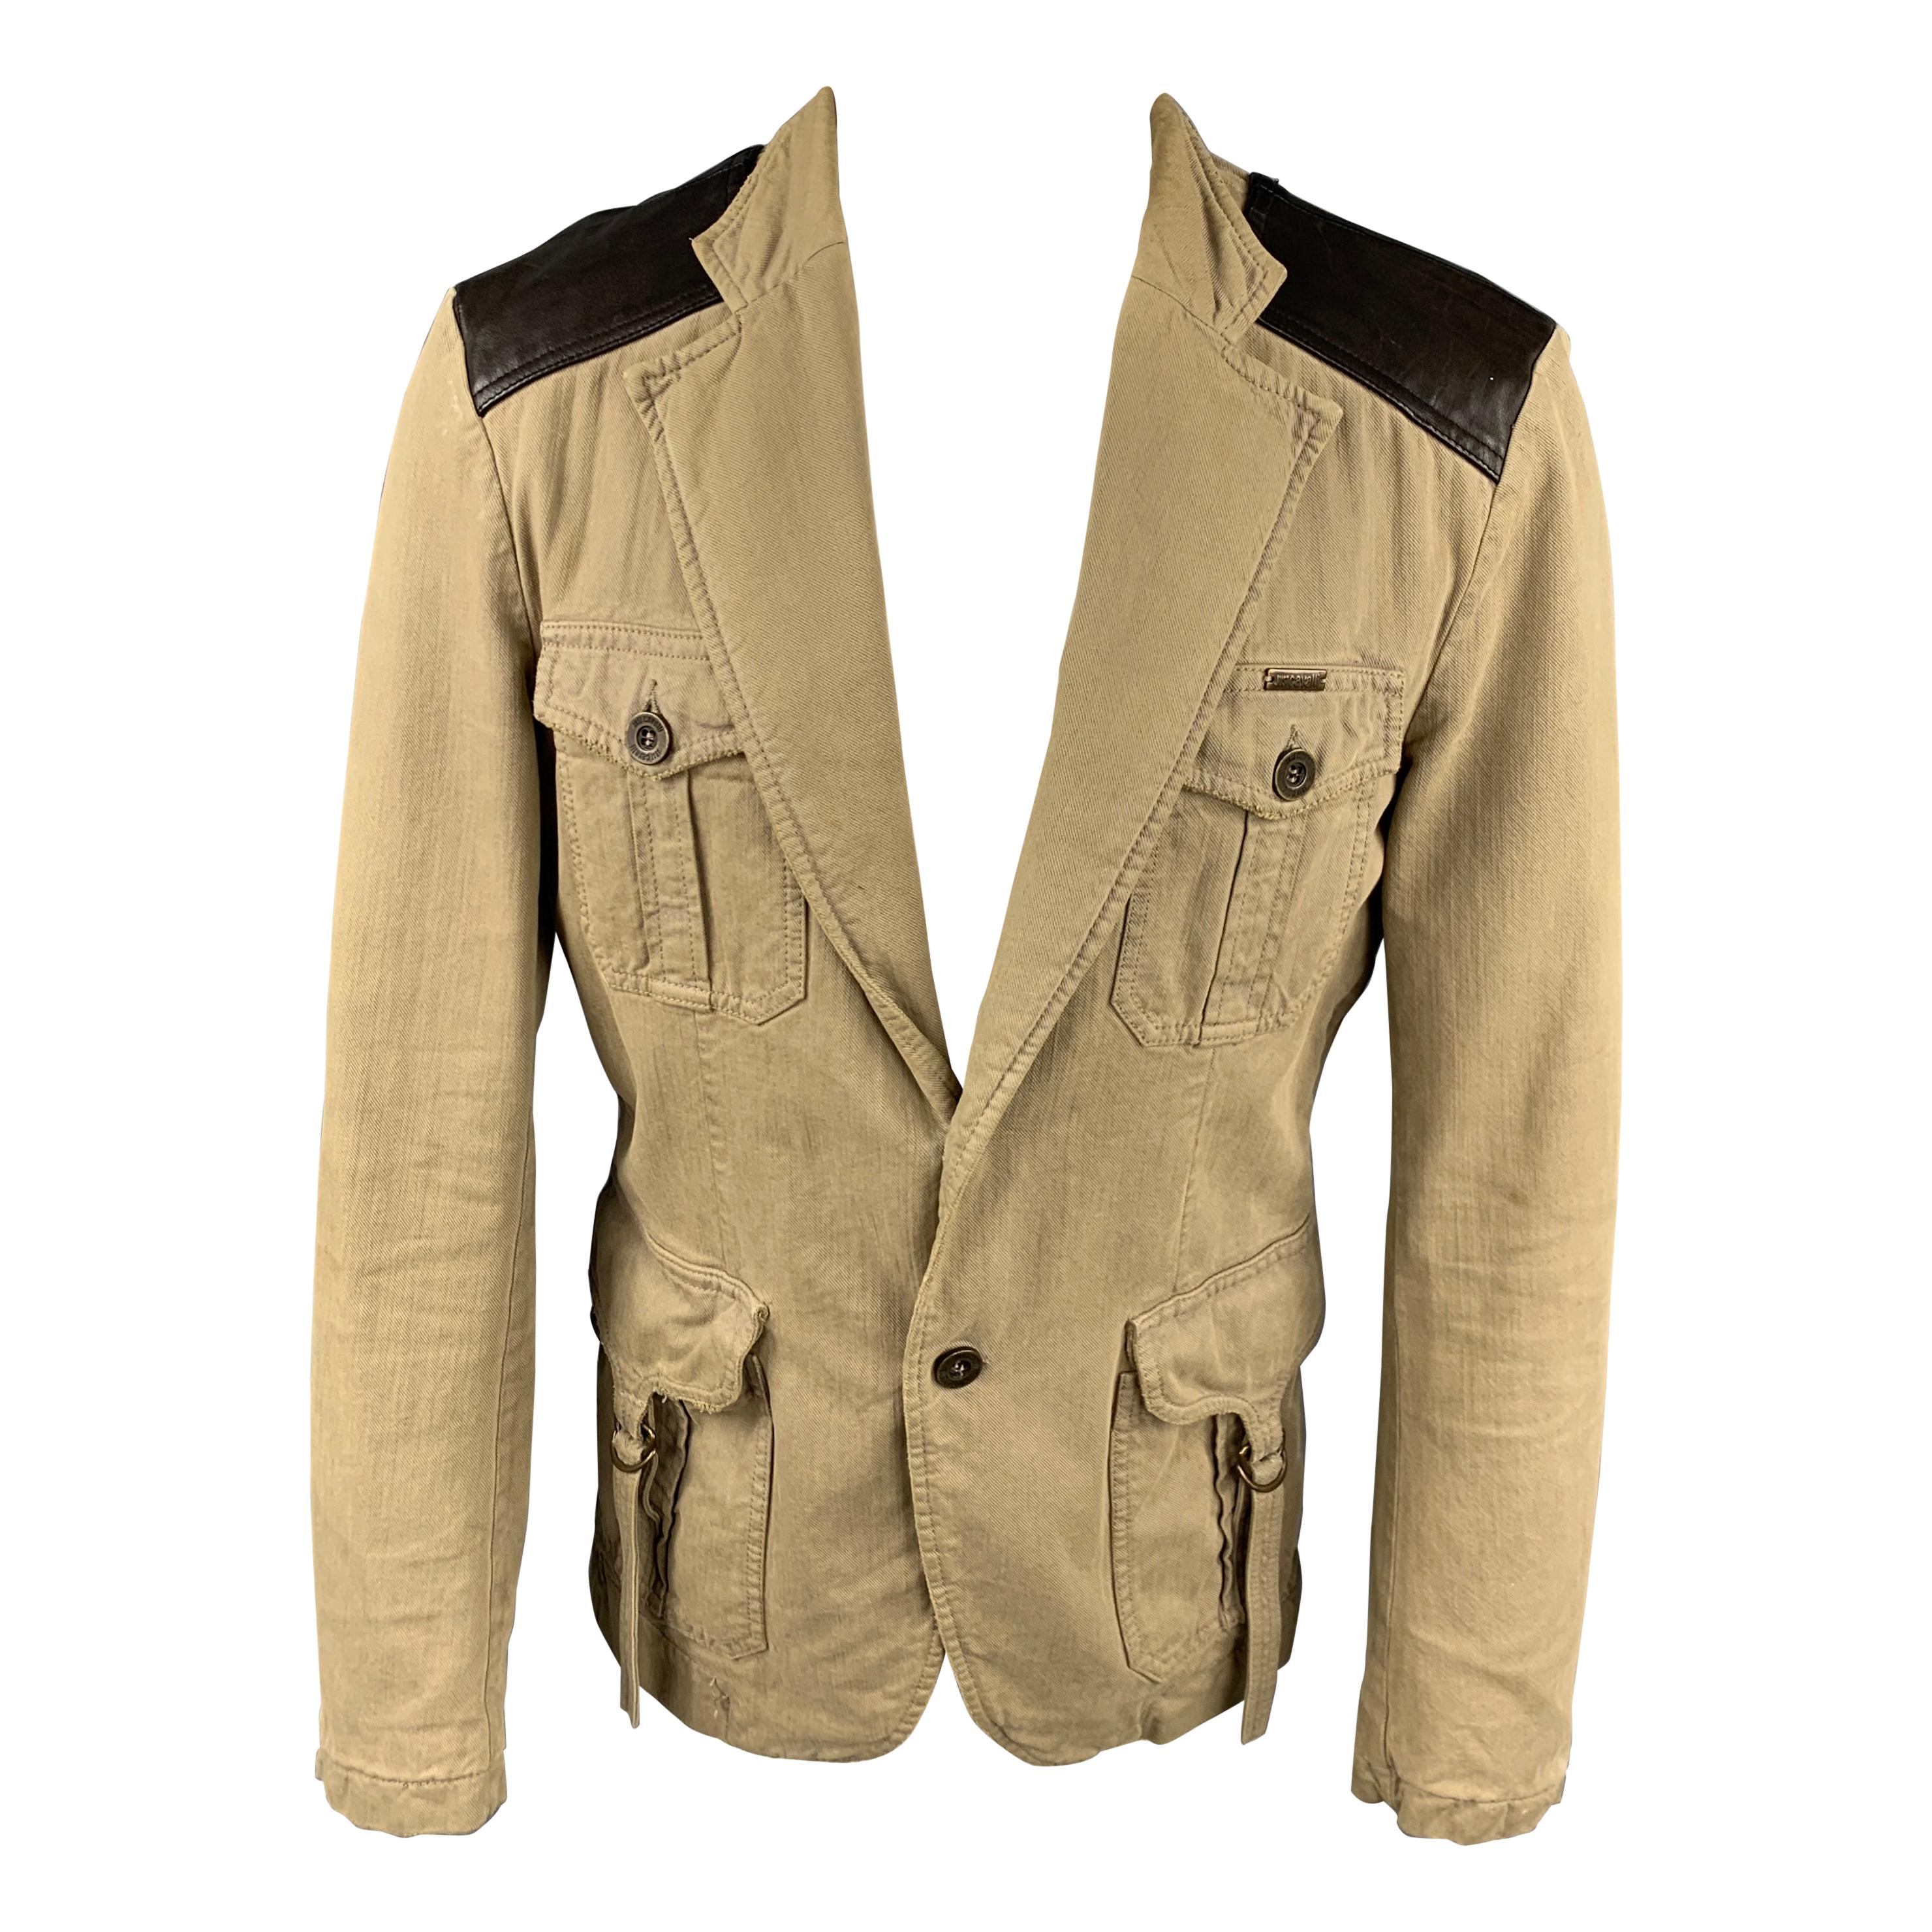 JUST CAVALLI Size L Khaki & Brown Mixed Fabrics Cotton Jacket